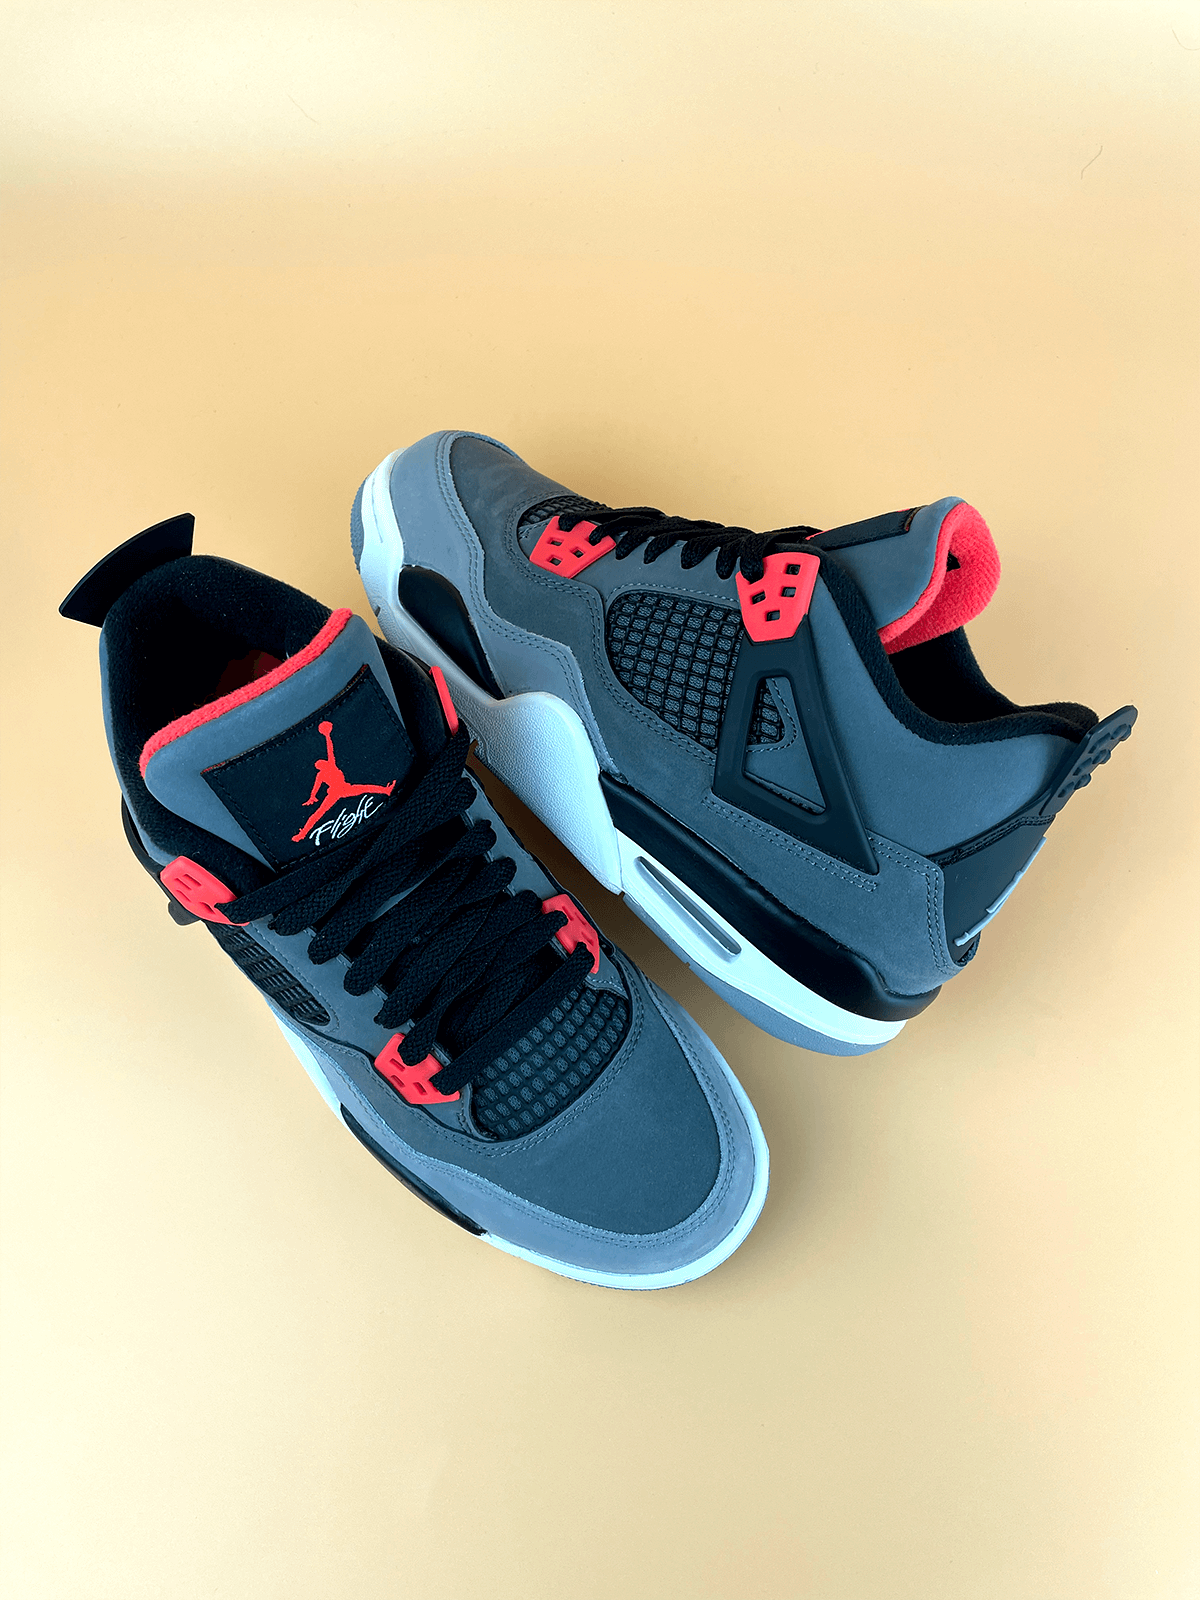 Jordan 4 Infrared